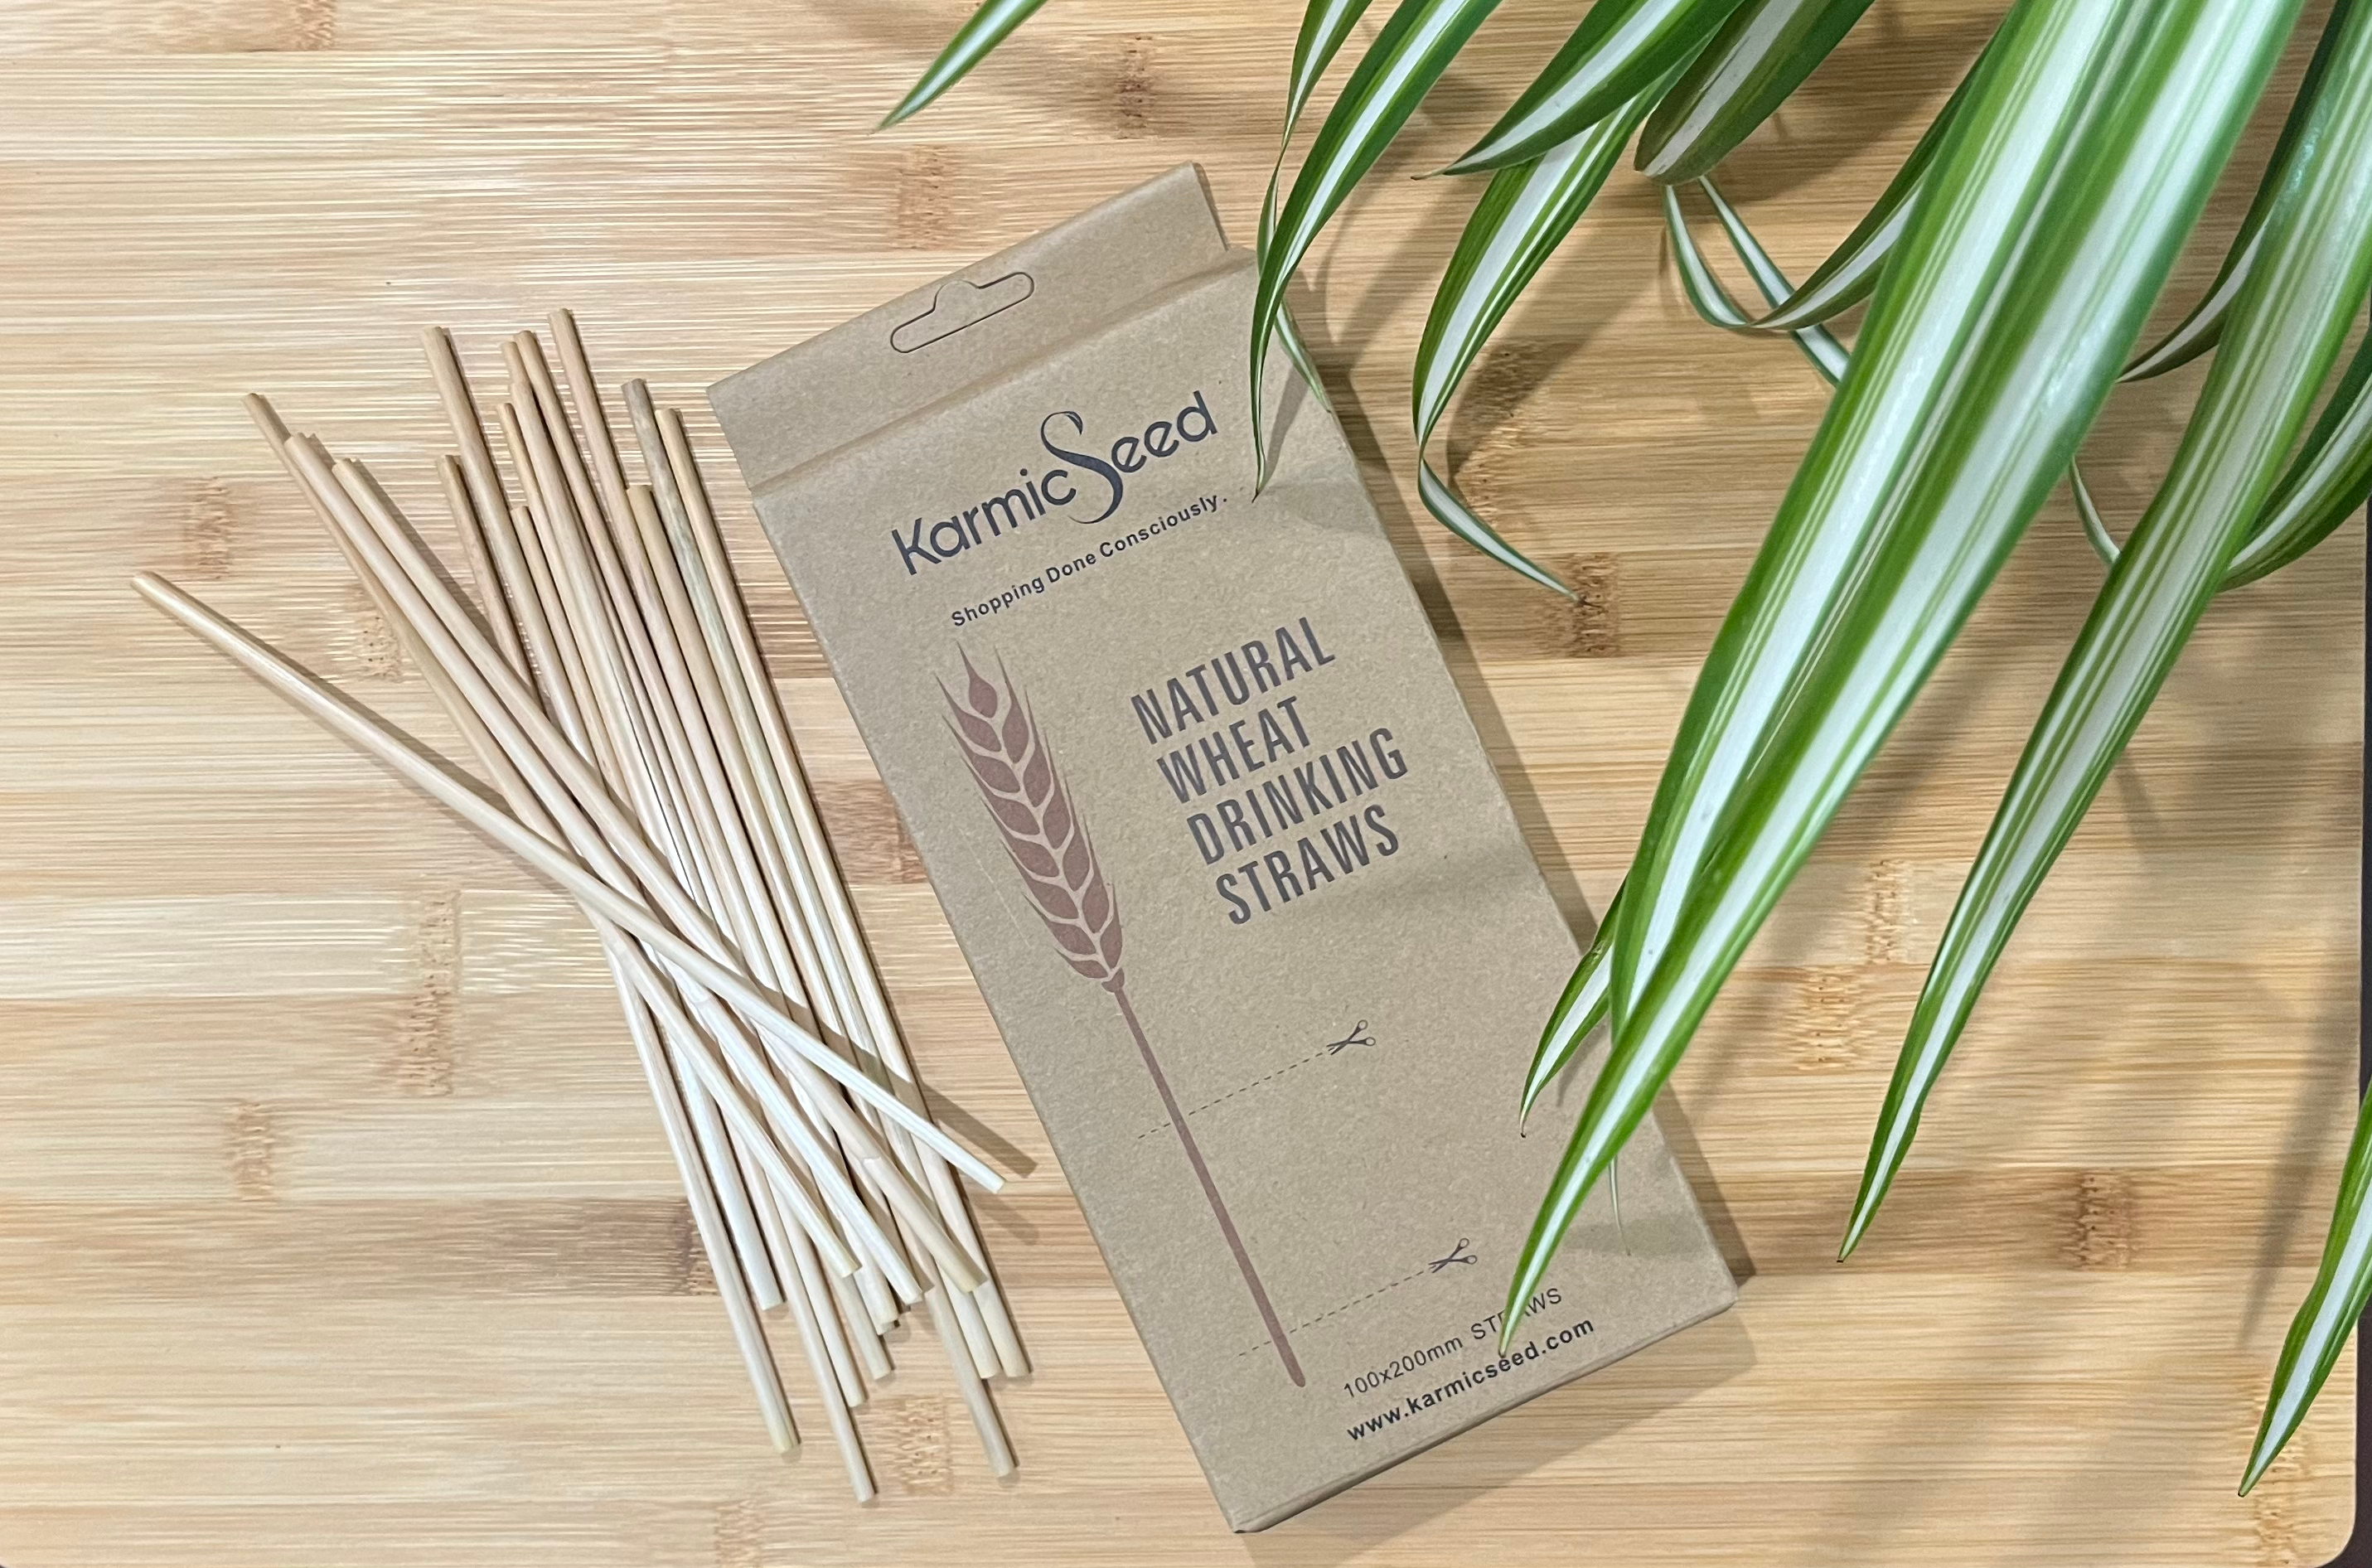 Karmic Seed Wheat Drinking Straw 100ct.